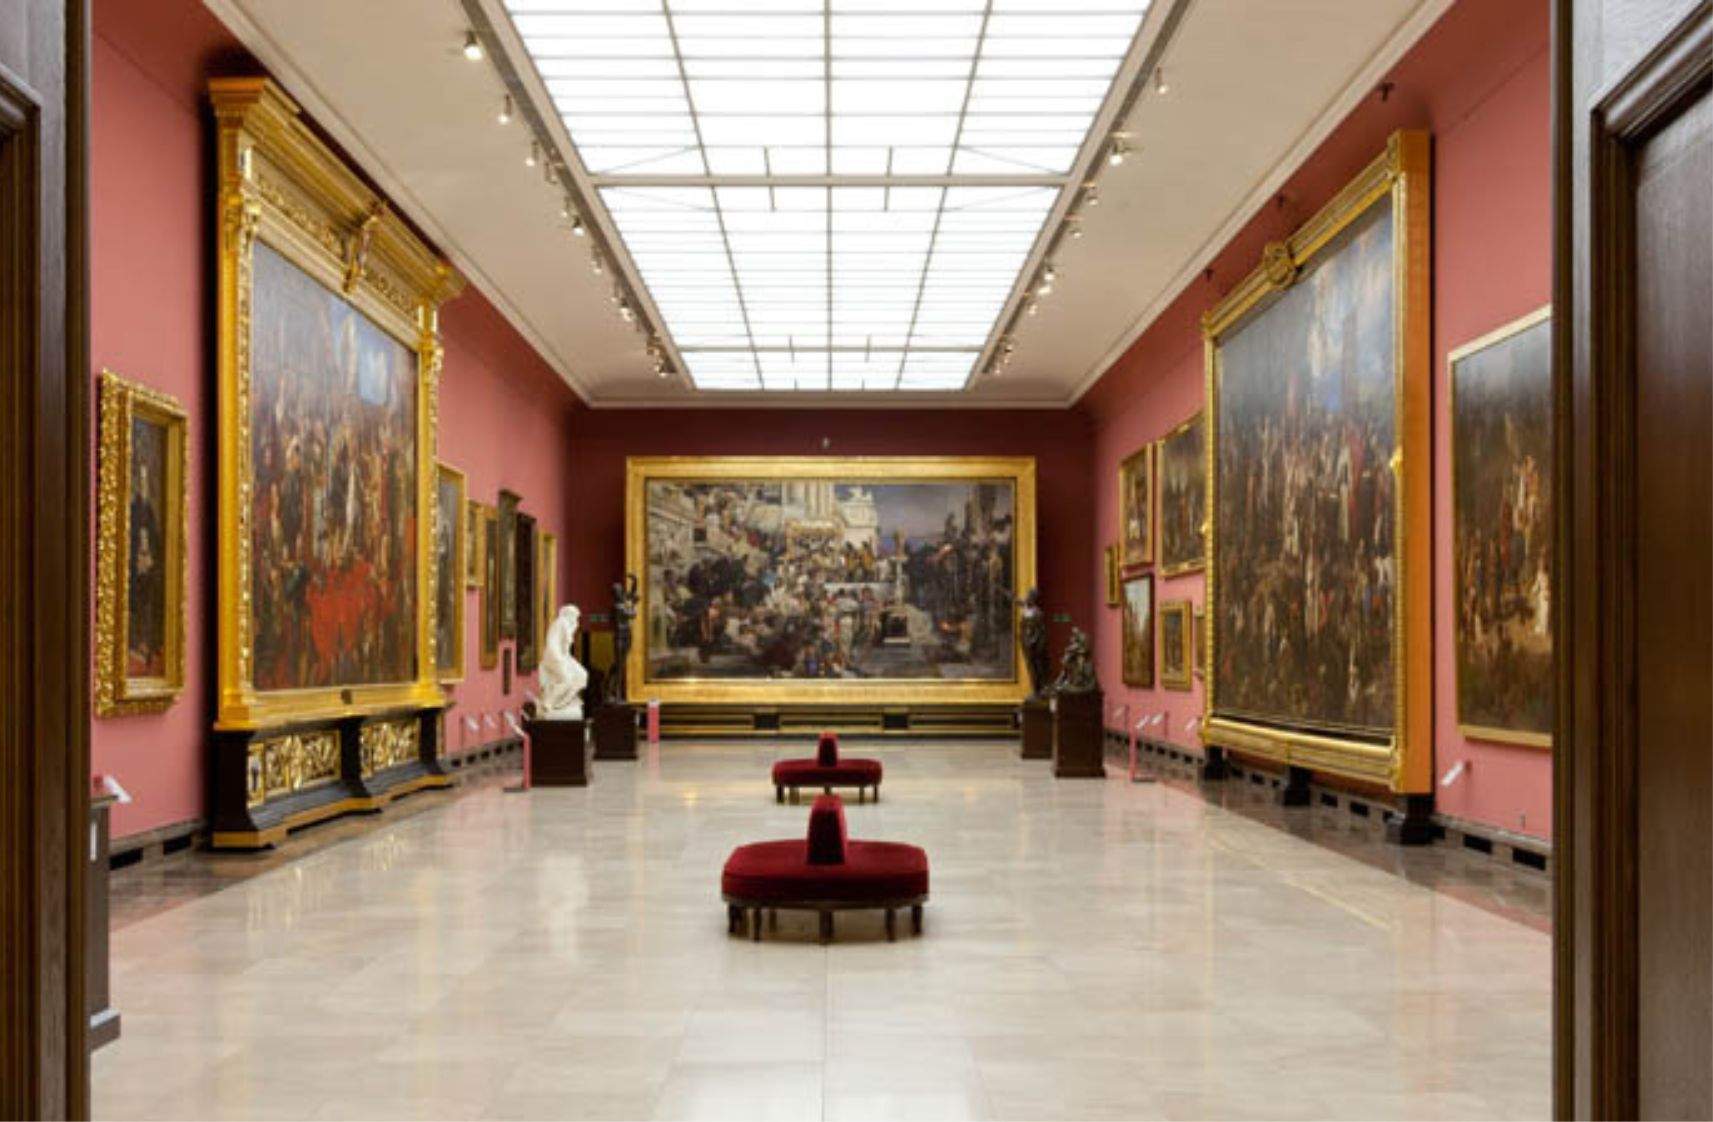 The Gallery of 19th Century Polish Art